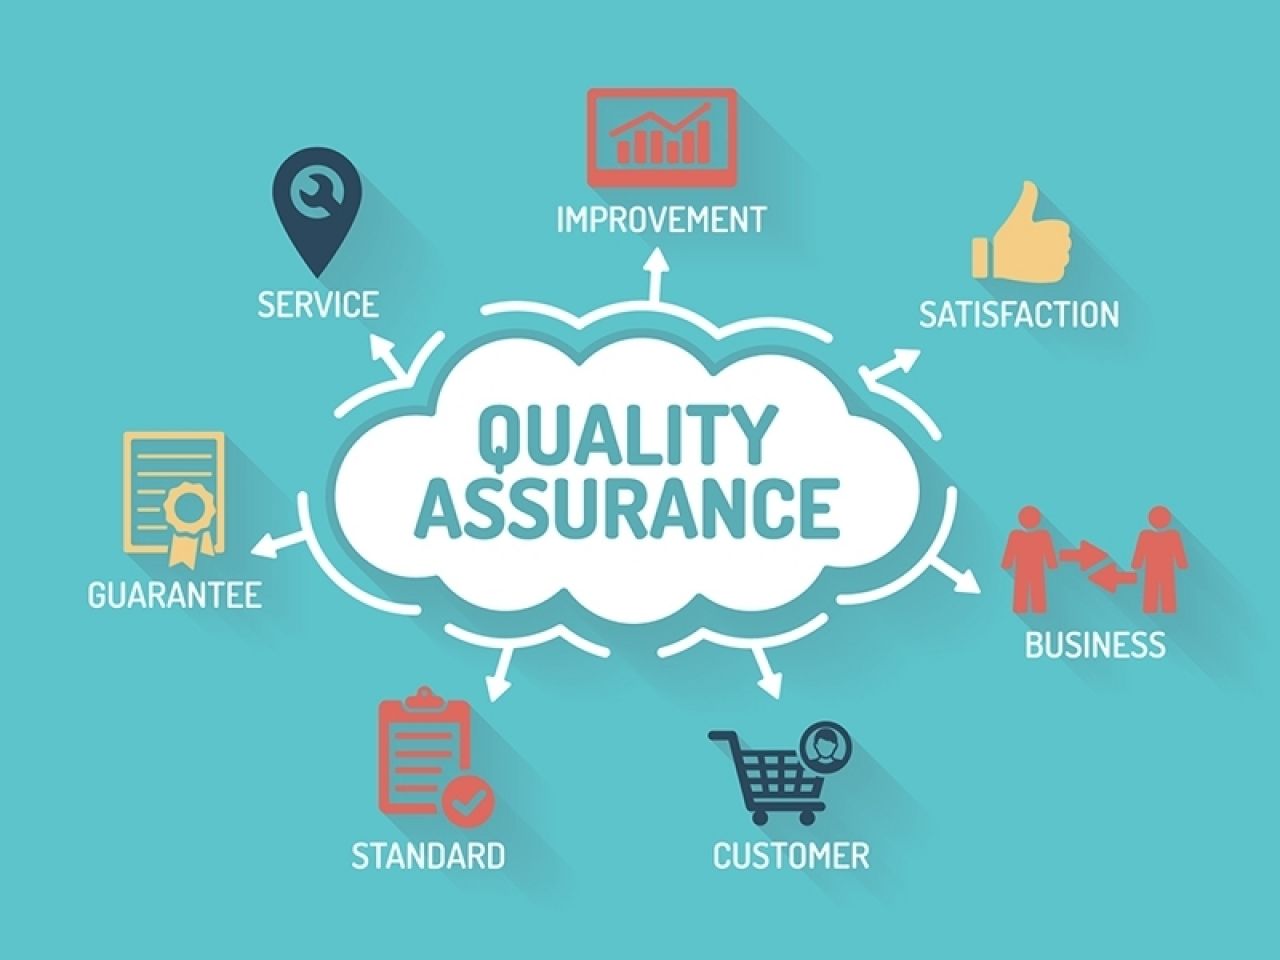 Software Quality Assurance benefits